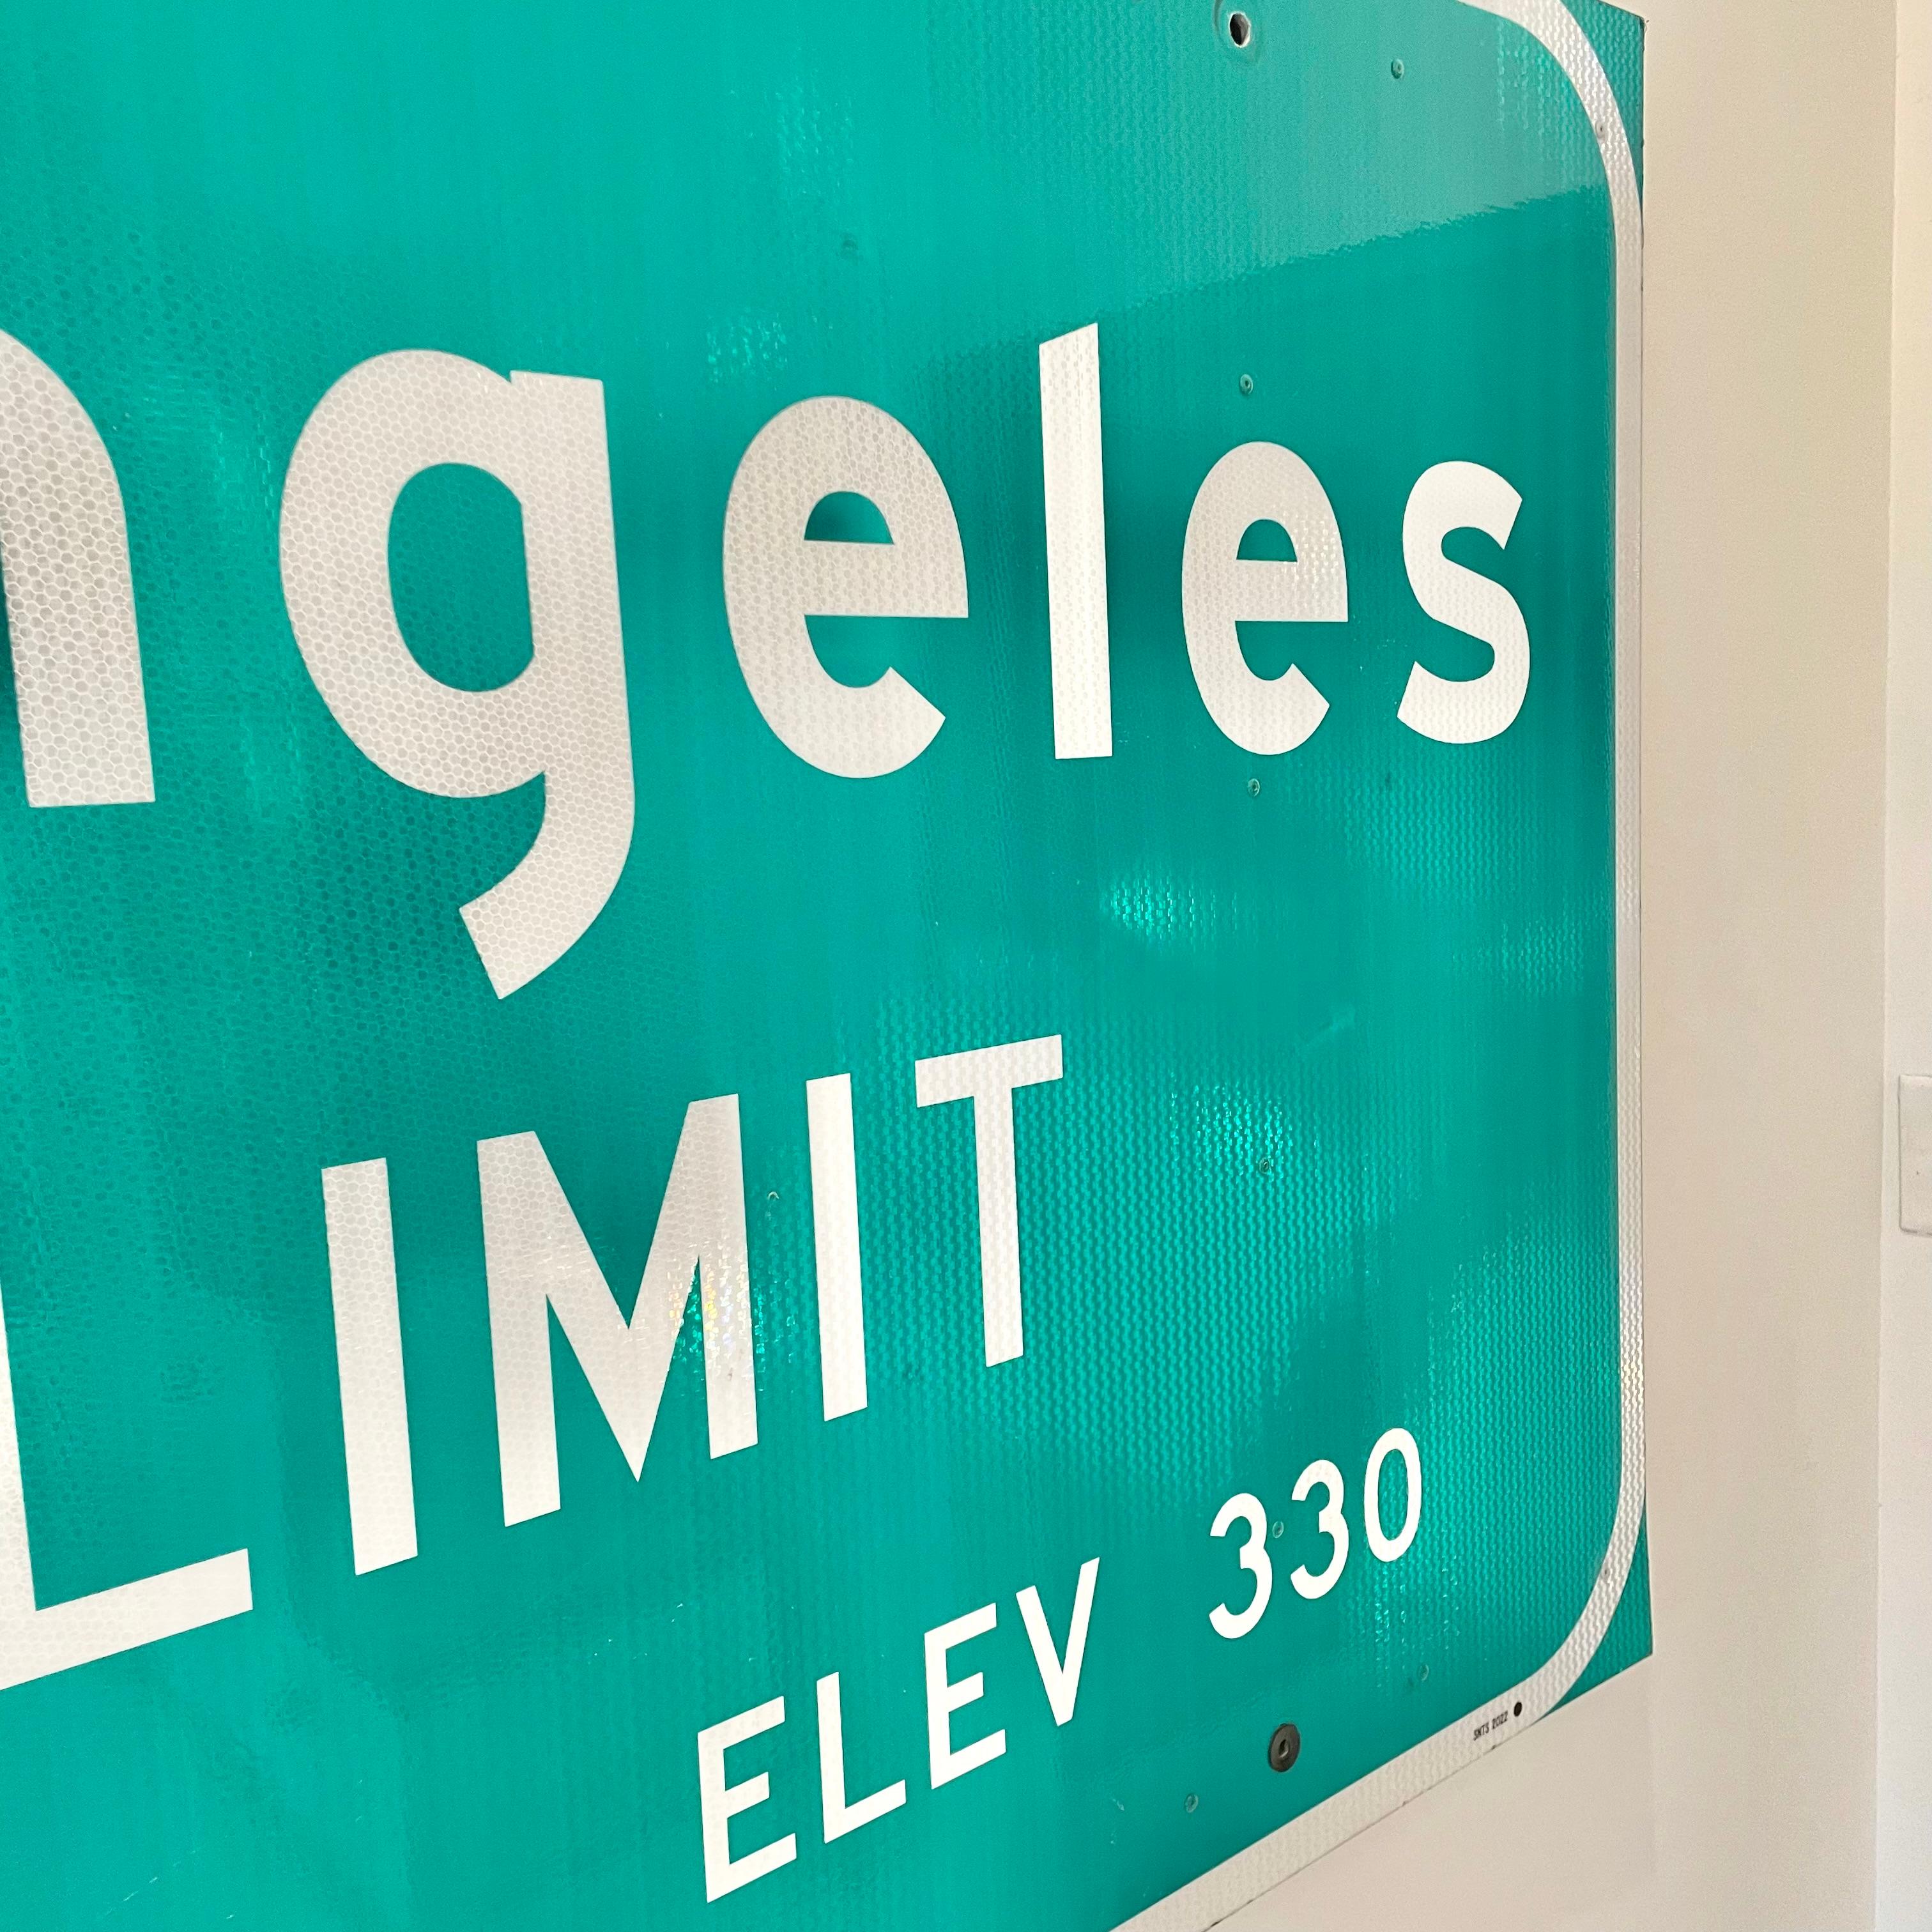 Los Angeles City Limit Freeway Sign, USA 2